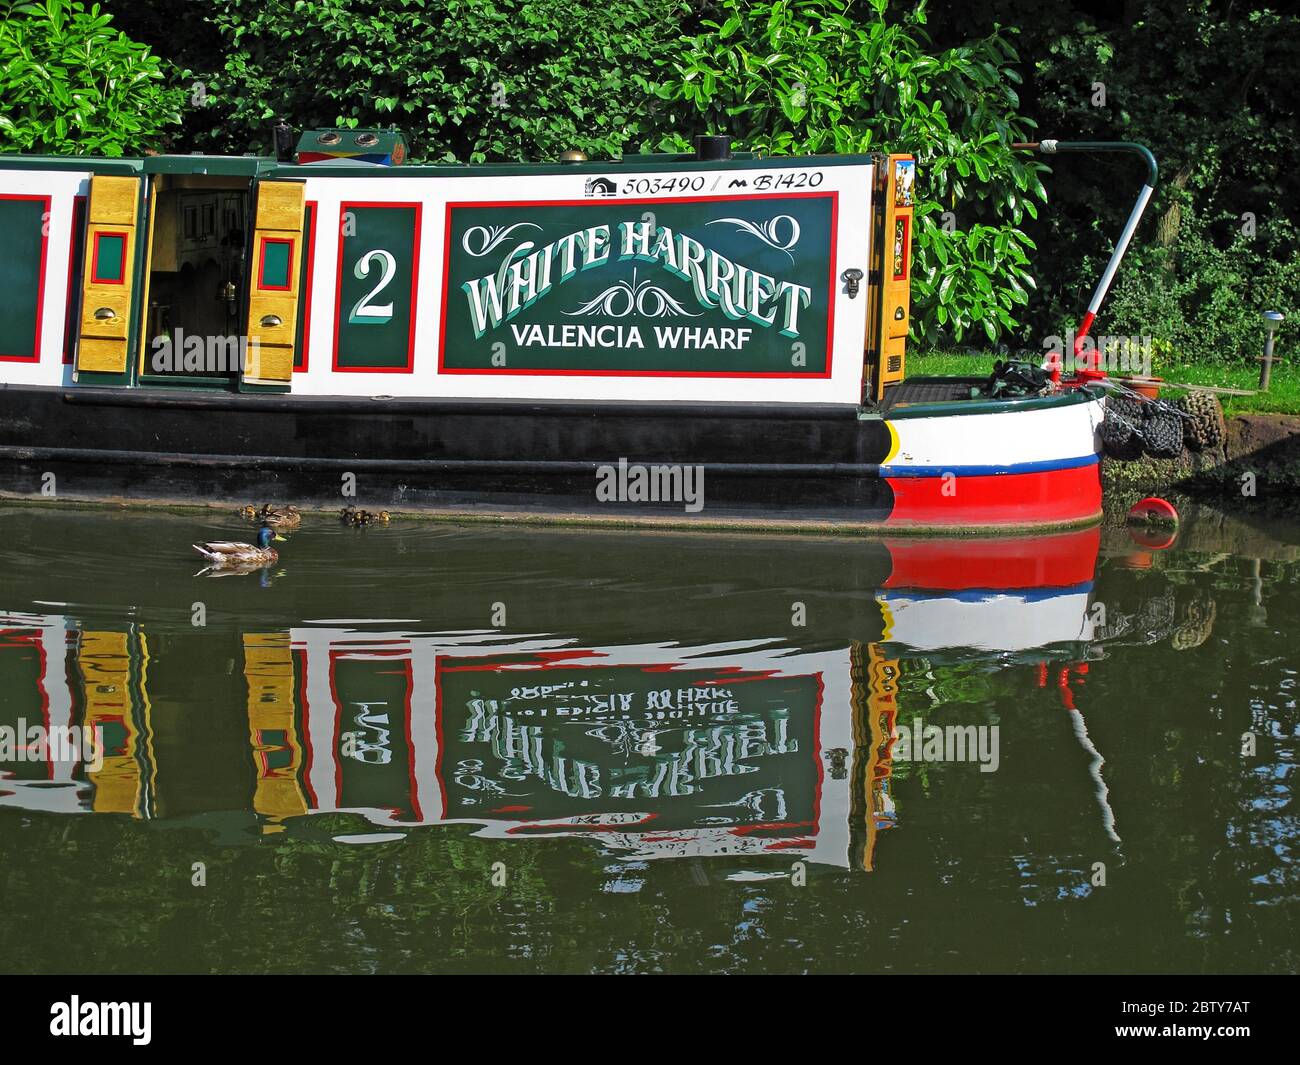 503490 ,B1420 White Harriet Valencia Wharf narrowboat ,barge on canal , Cheshire, England, UK, reflection Stock Photo